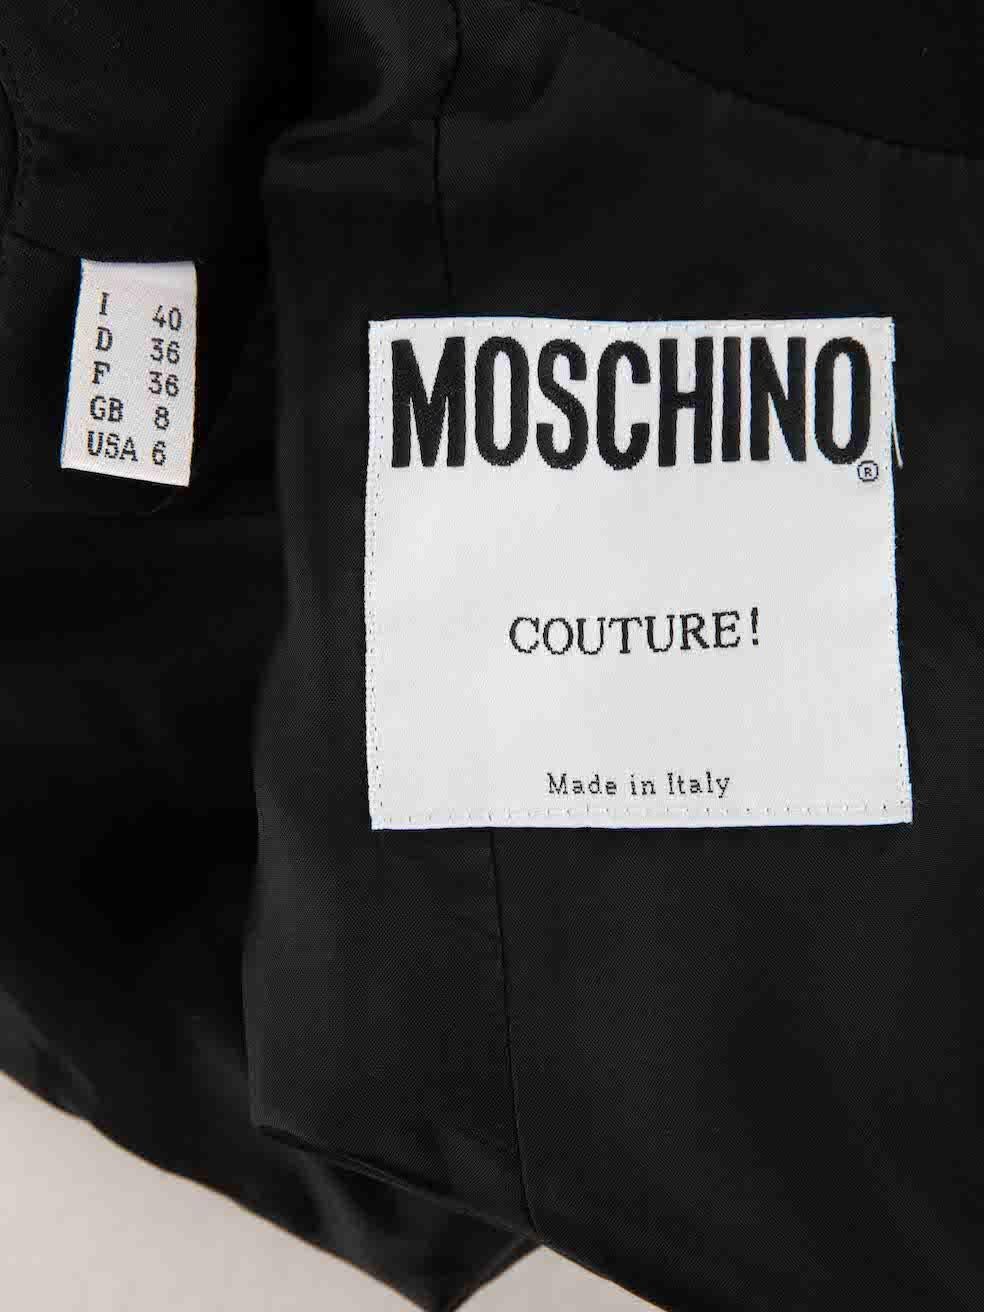 Moschino Women's Moschino Couture! Black High Neck Mini Dress 4